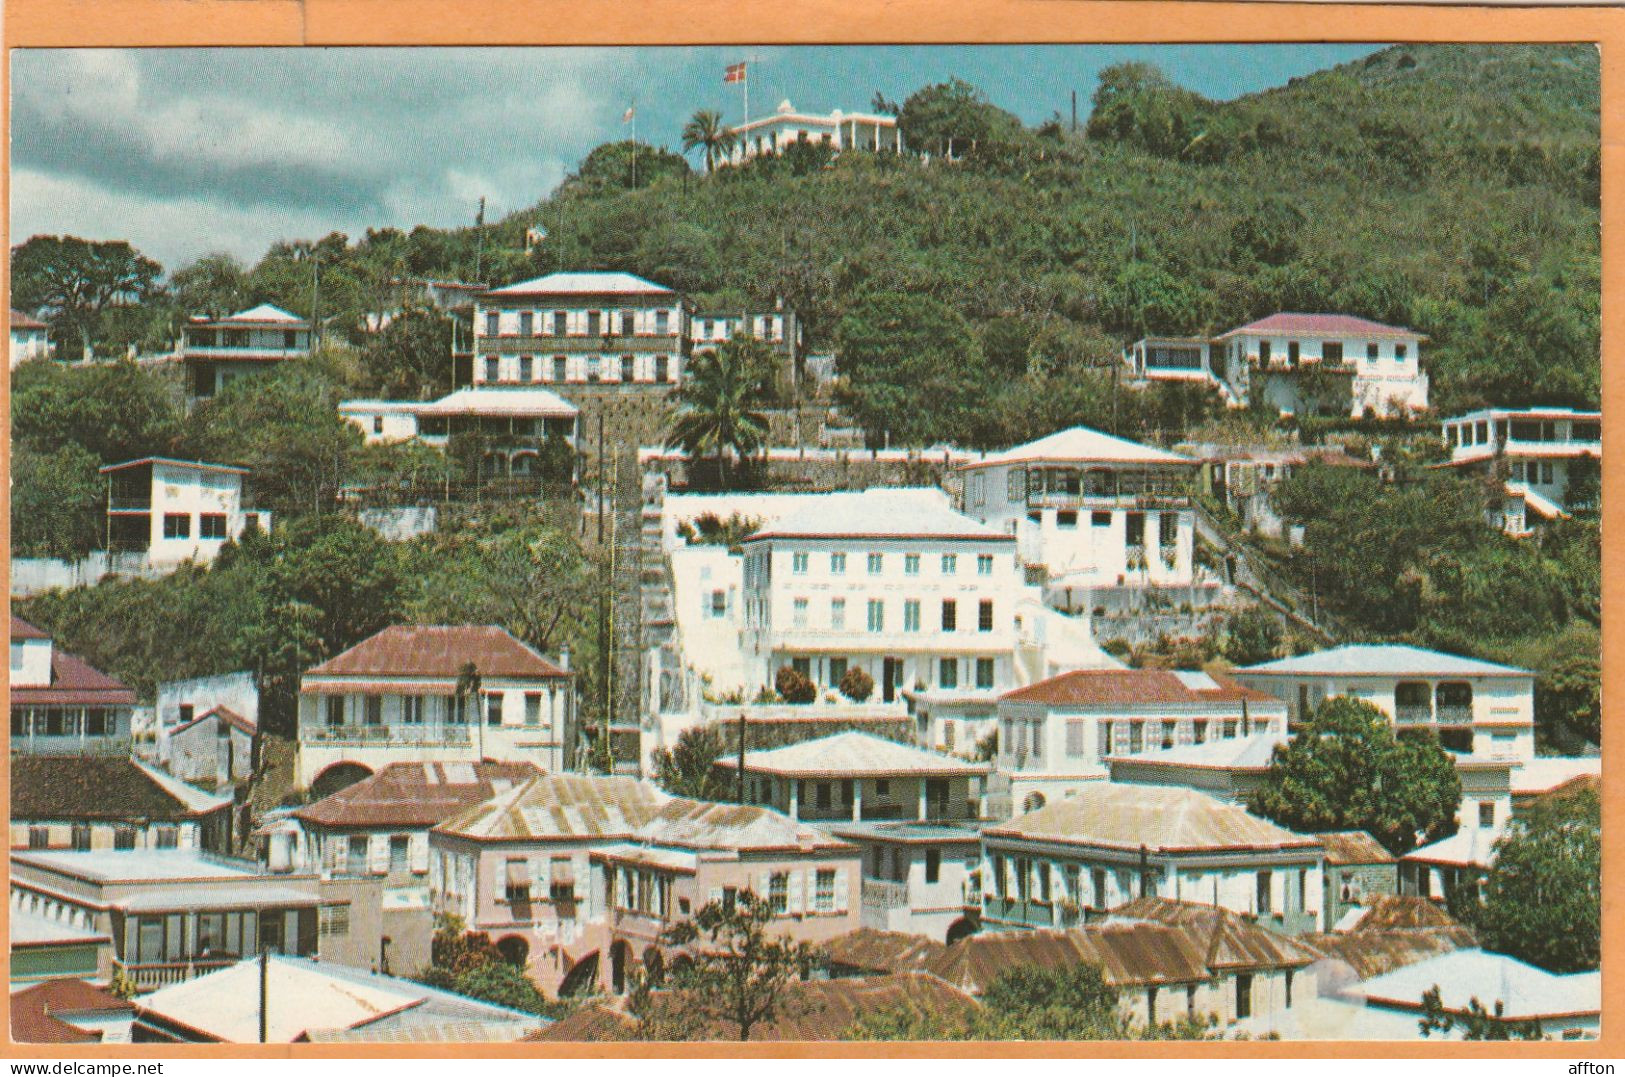 St Thomas Virgin Islands Old Postcard - Jungferninseln, Amerik.